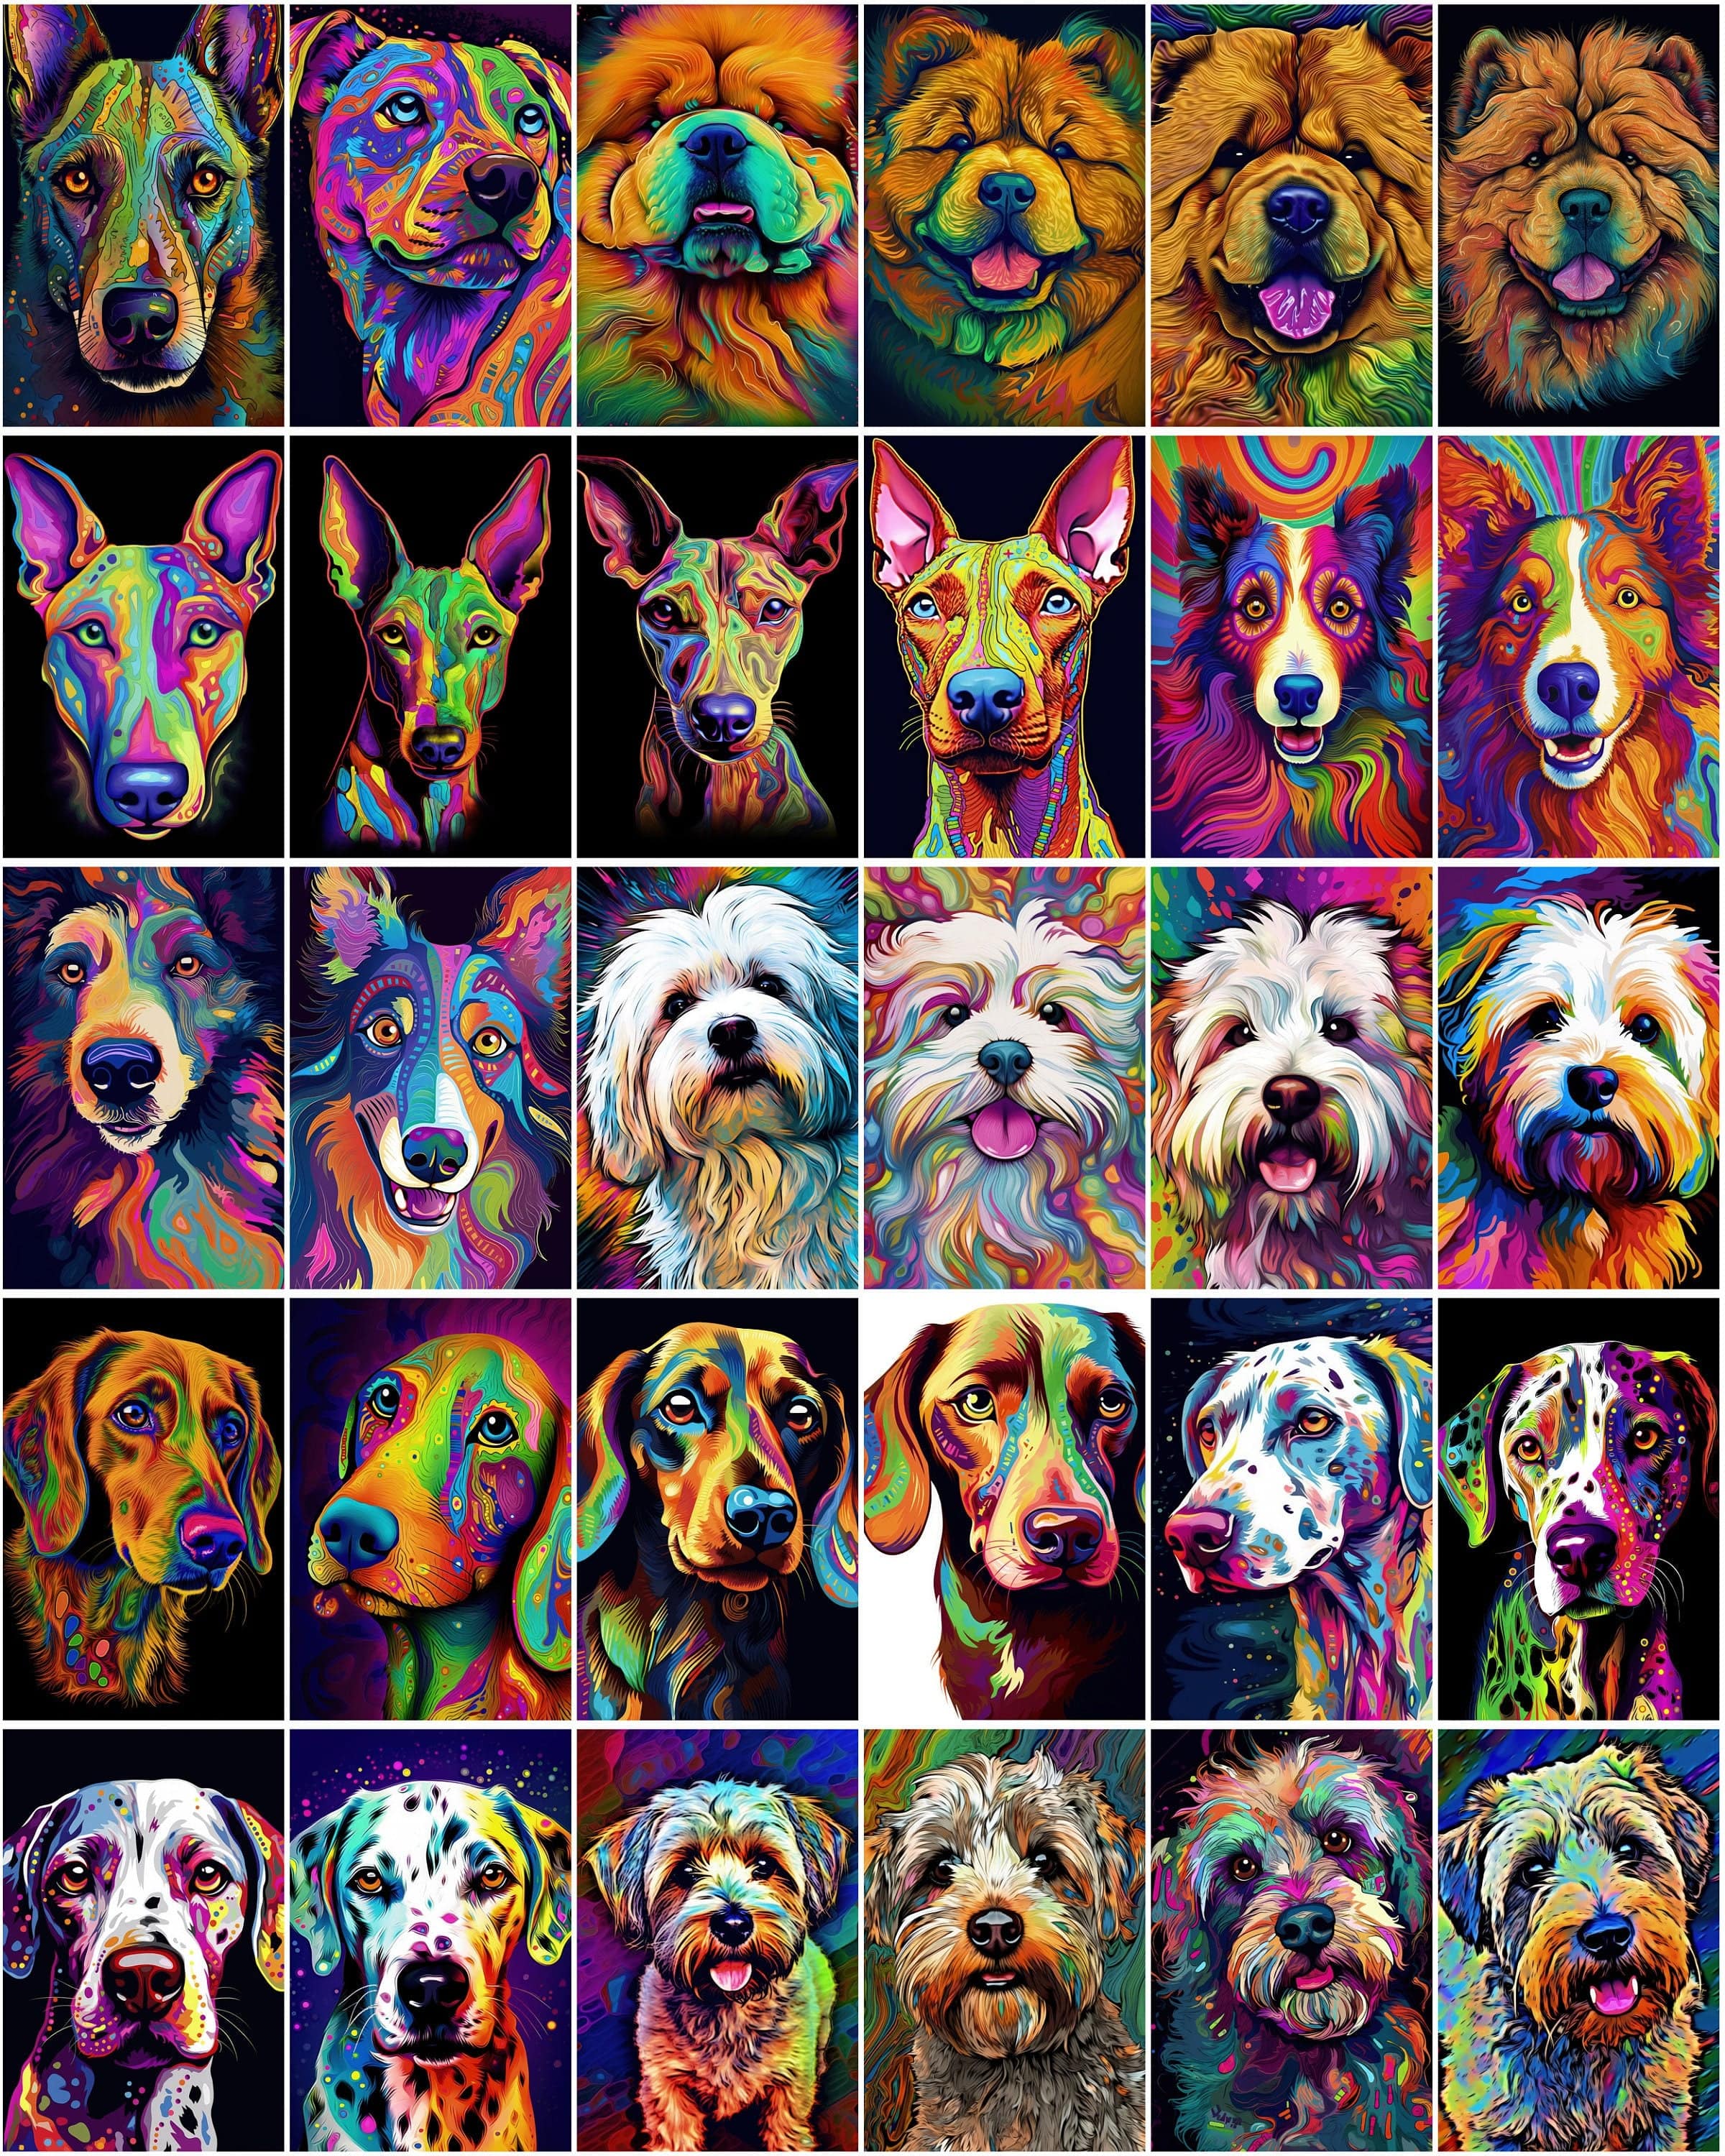 770 Psychedelic Dog Breed Images, Colorful Dog Illustrations, Commercial License Included Digital Download Sumobundle